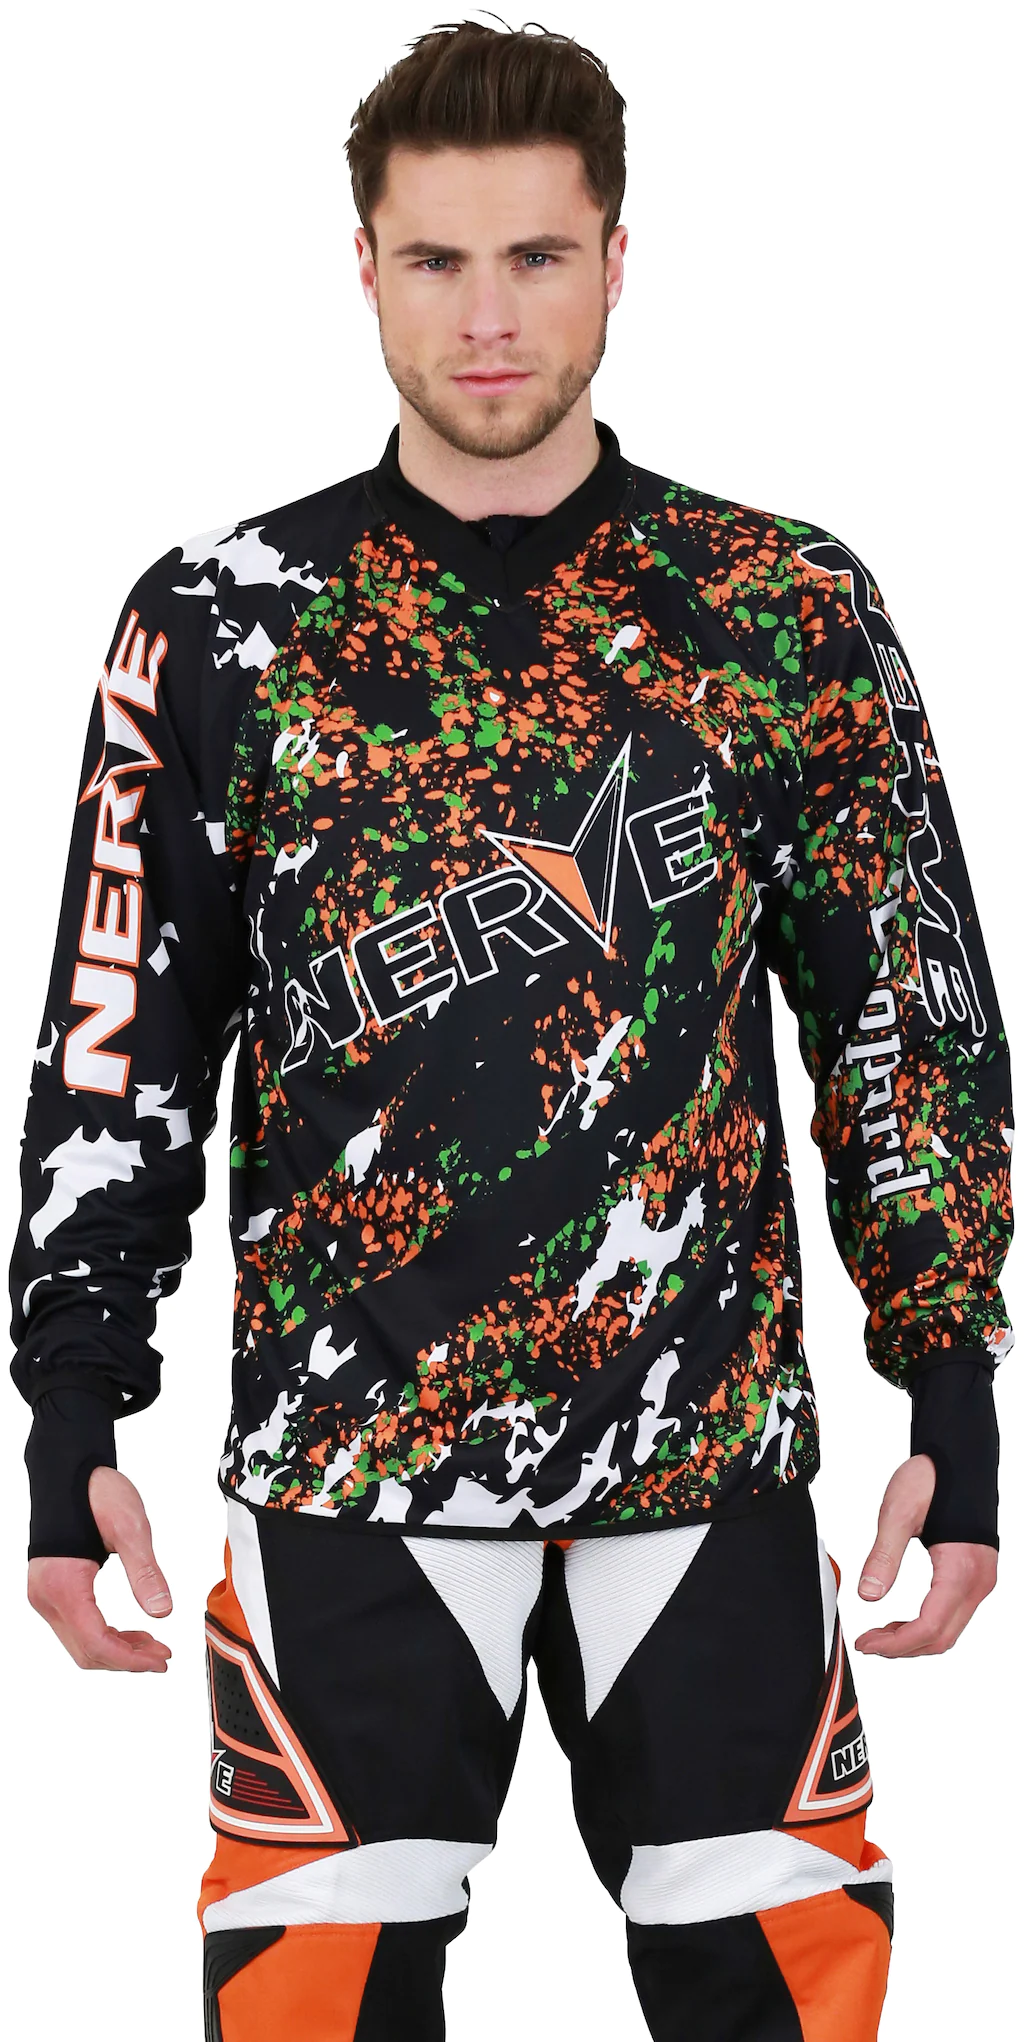 NERVE Motocross-Shirt "Nerve" günstig online kaufen